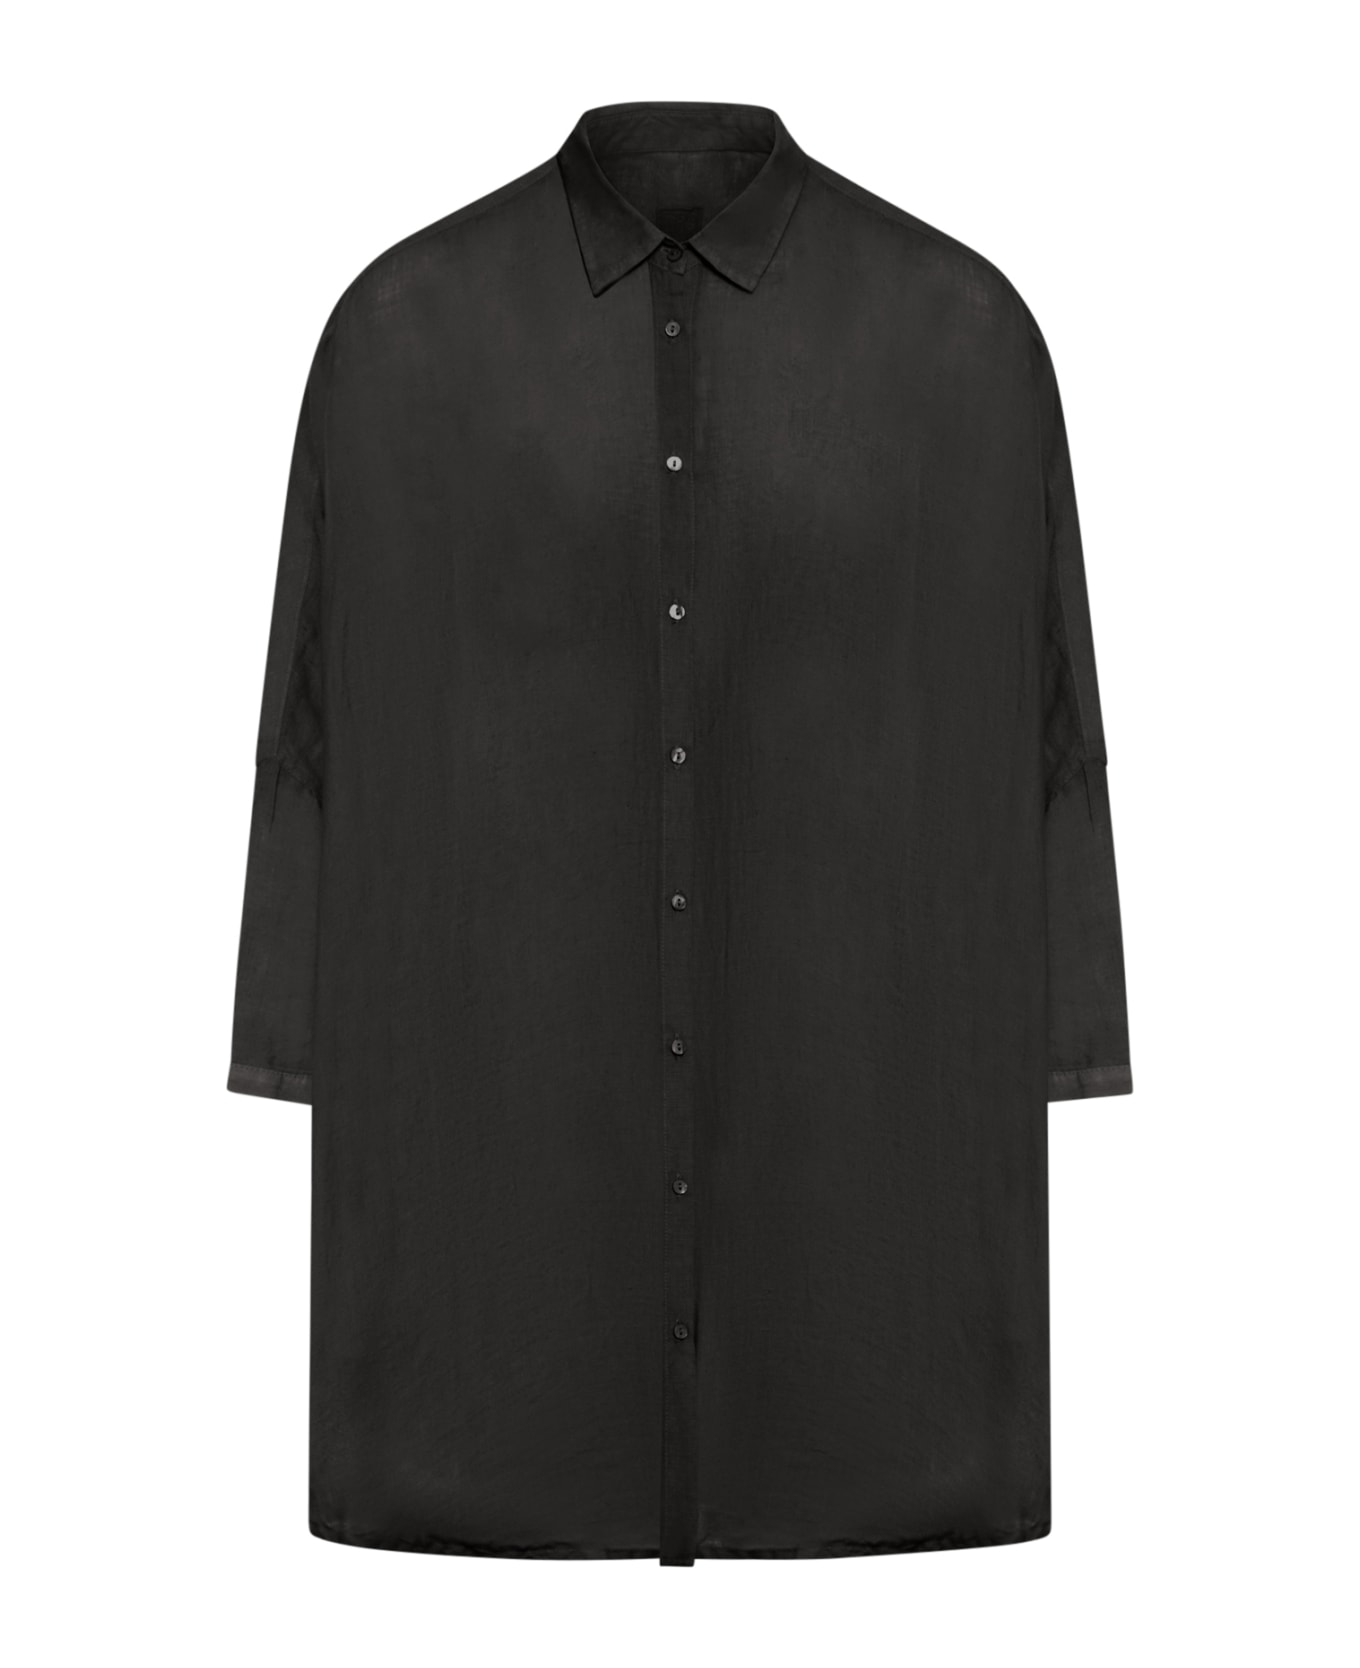 120% Lino Short Sleeve Woman Shirt - Black